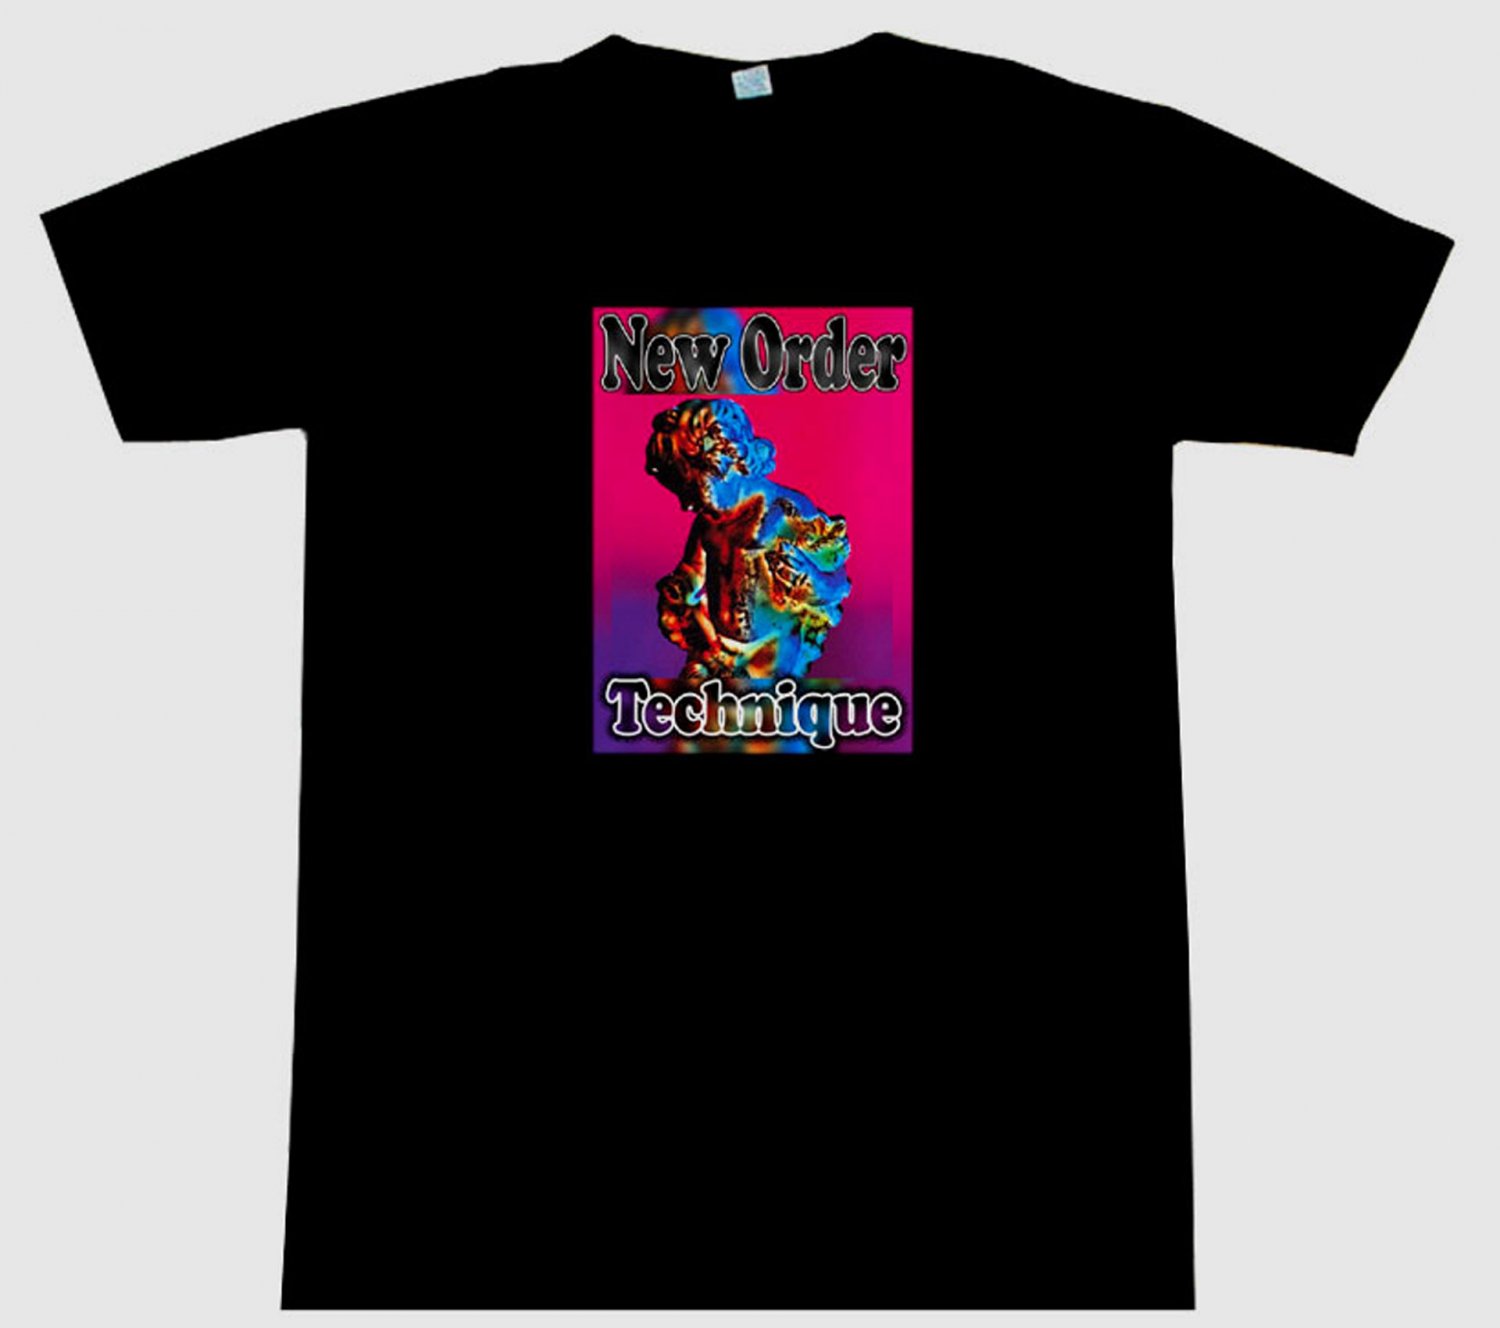 New Order TECHNIQUE Tee T-Shirt